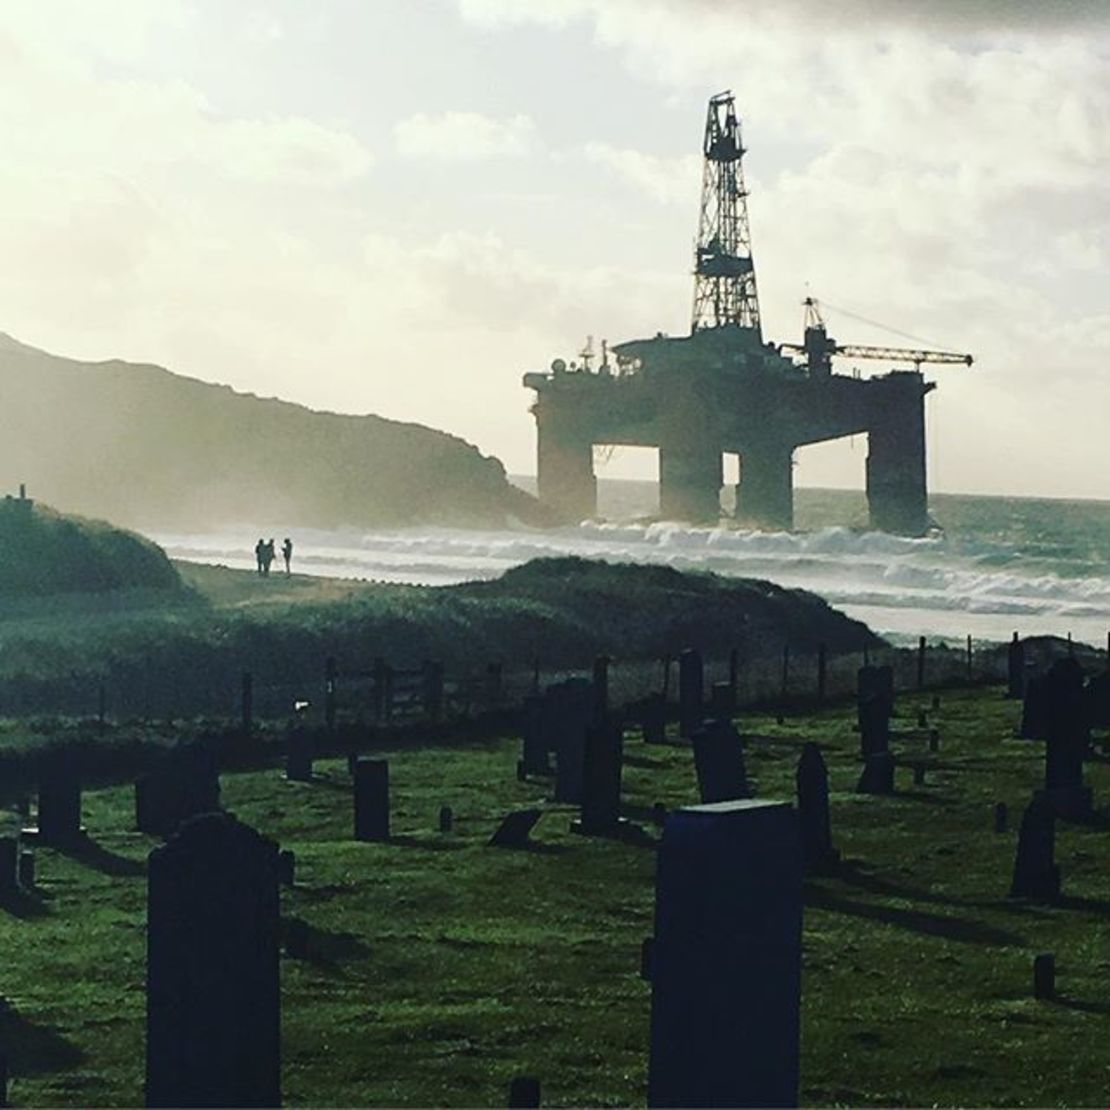 Scottish oil rig runs aground